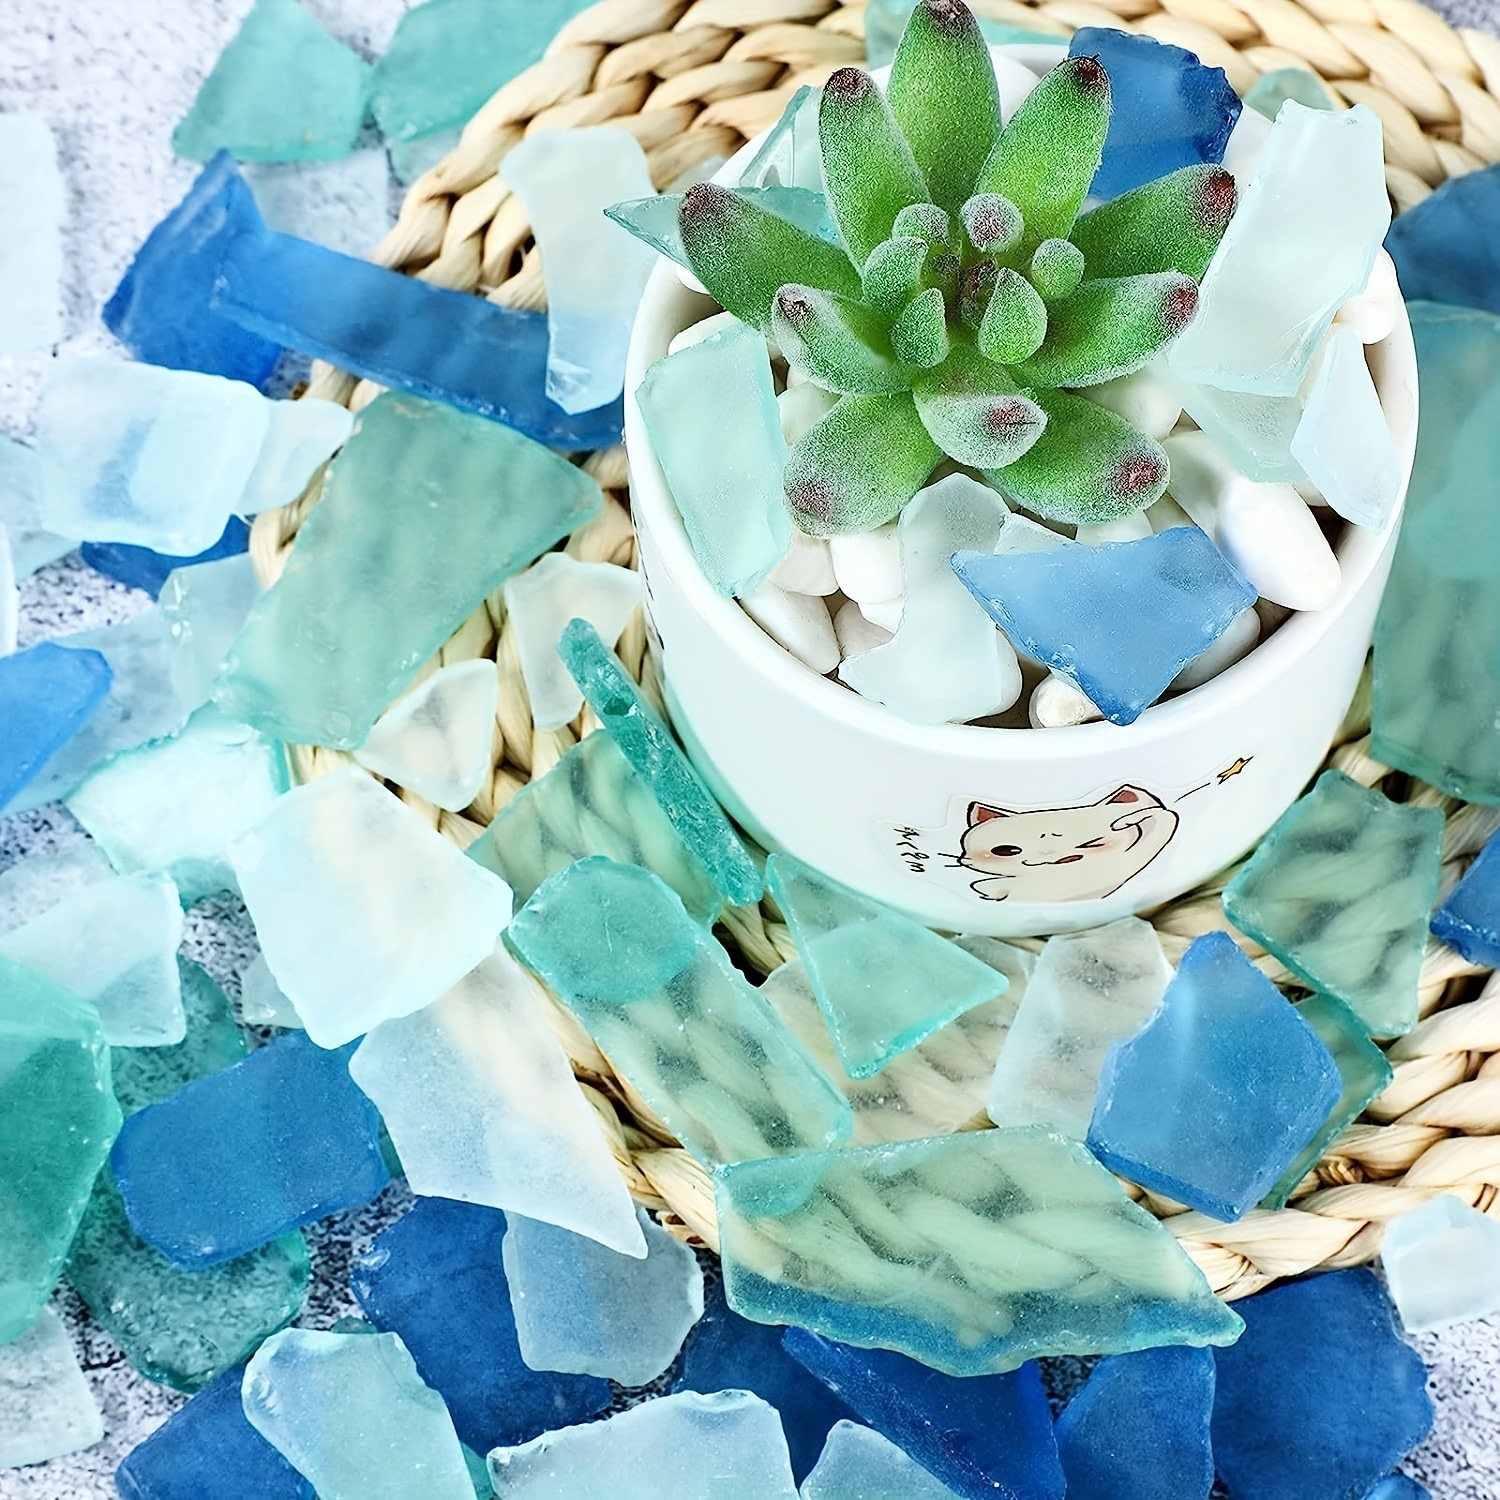 Giftvest Sea Glass for Crafts - 16oz Versatile Decorative Frosted Seaglass Pieces - Vase Filler, DIY Art Craft Supplies - Beach Weddings, Home Decor